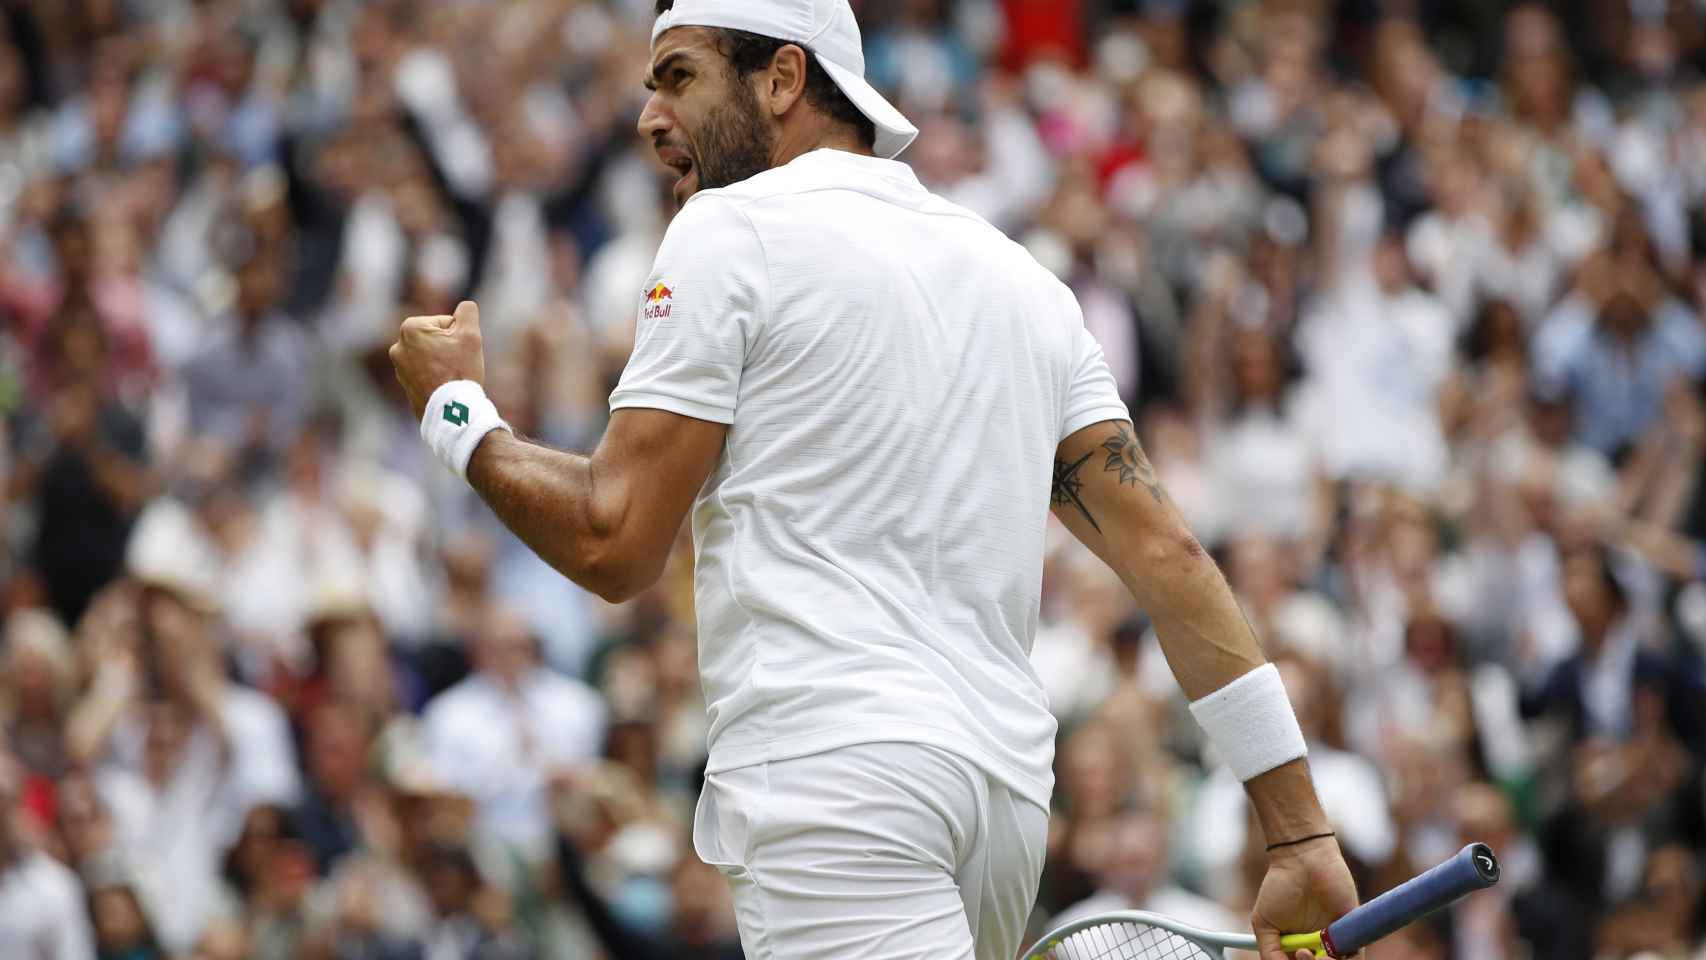 Berrettini celebra un punto ante Djokovic en Wimbledon